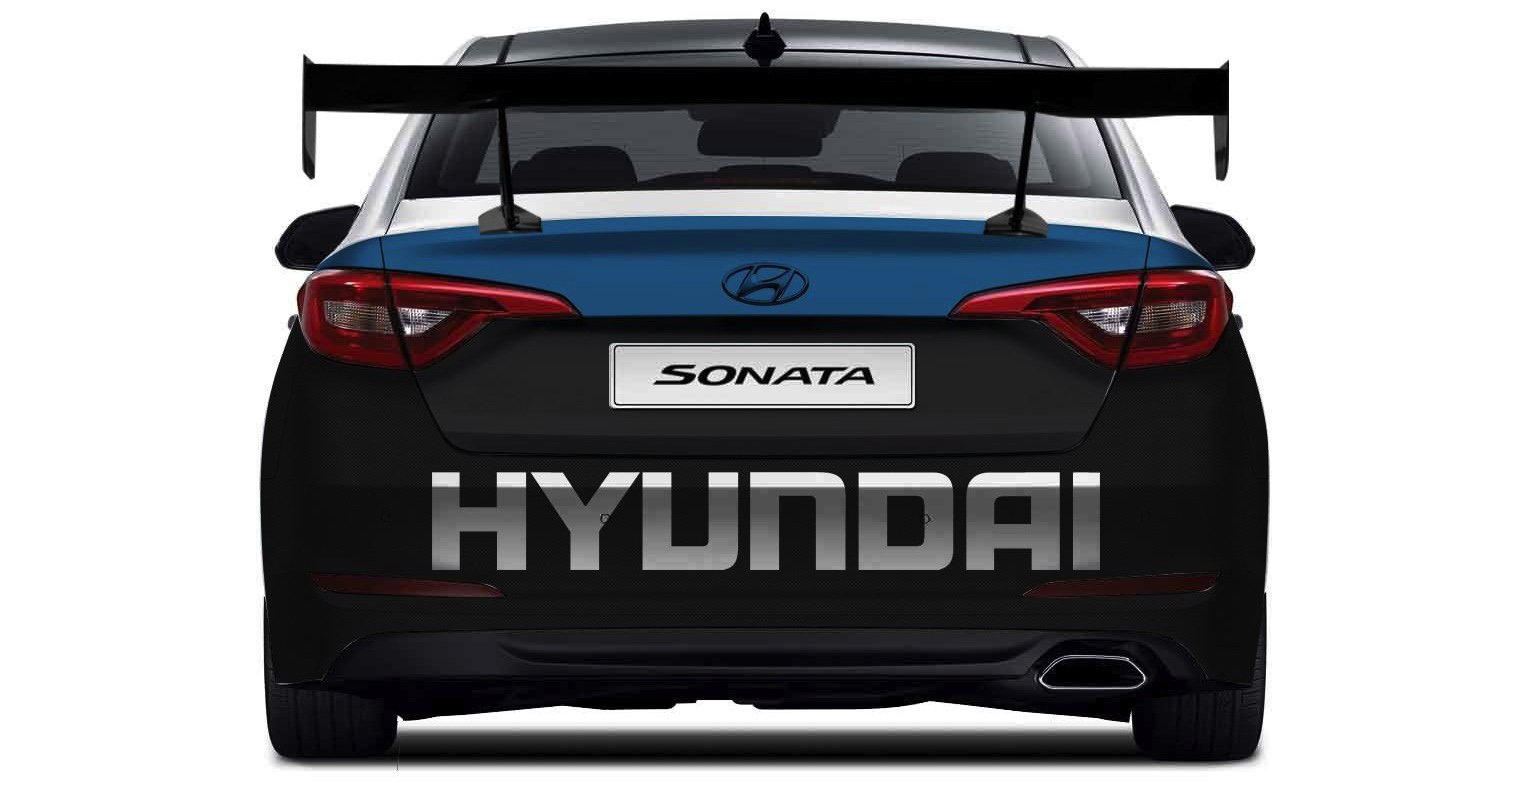 Bisimoto planning monster Hyundai Sonata project for SEMA